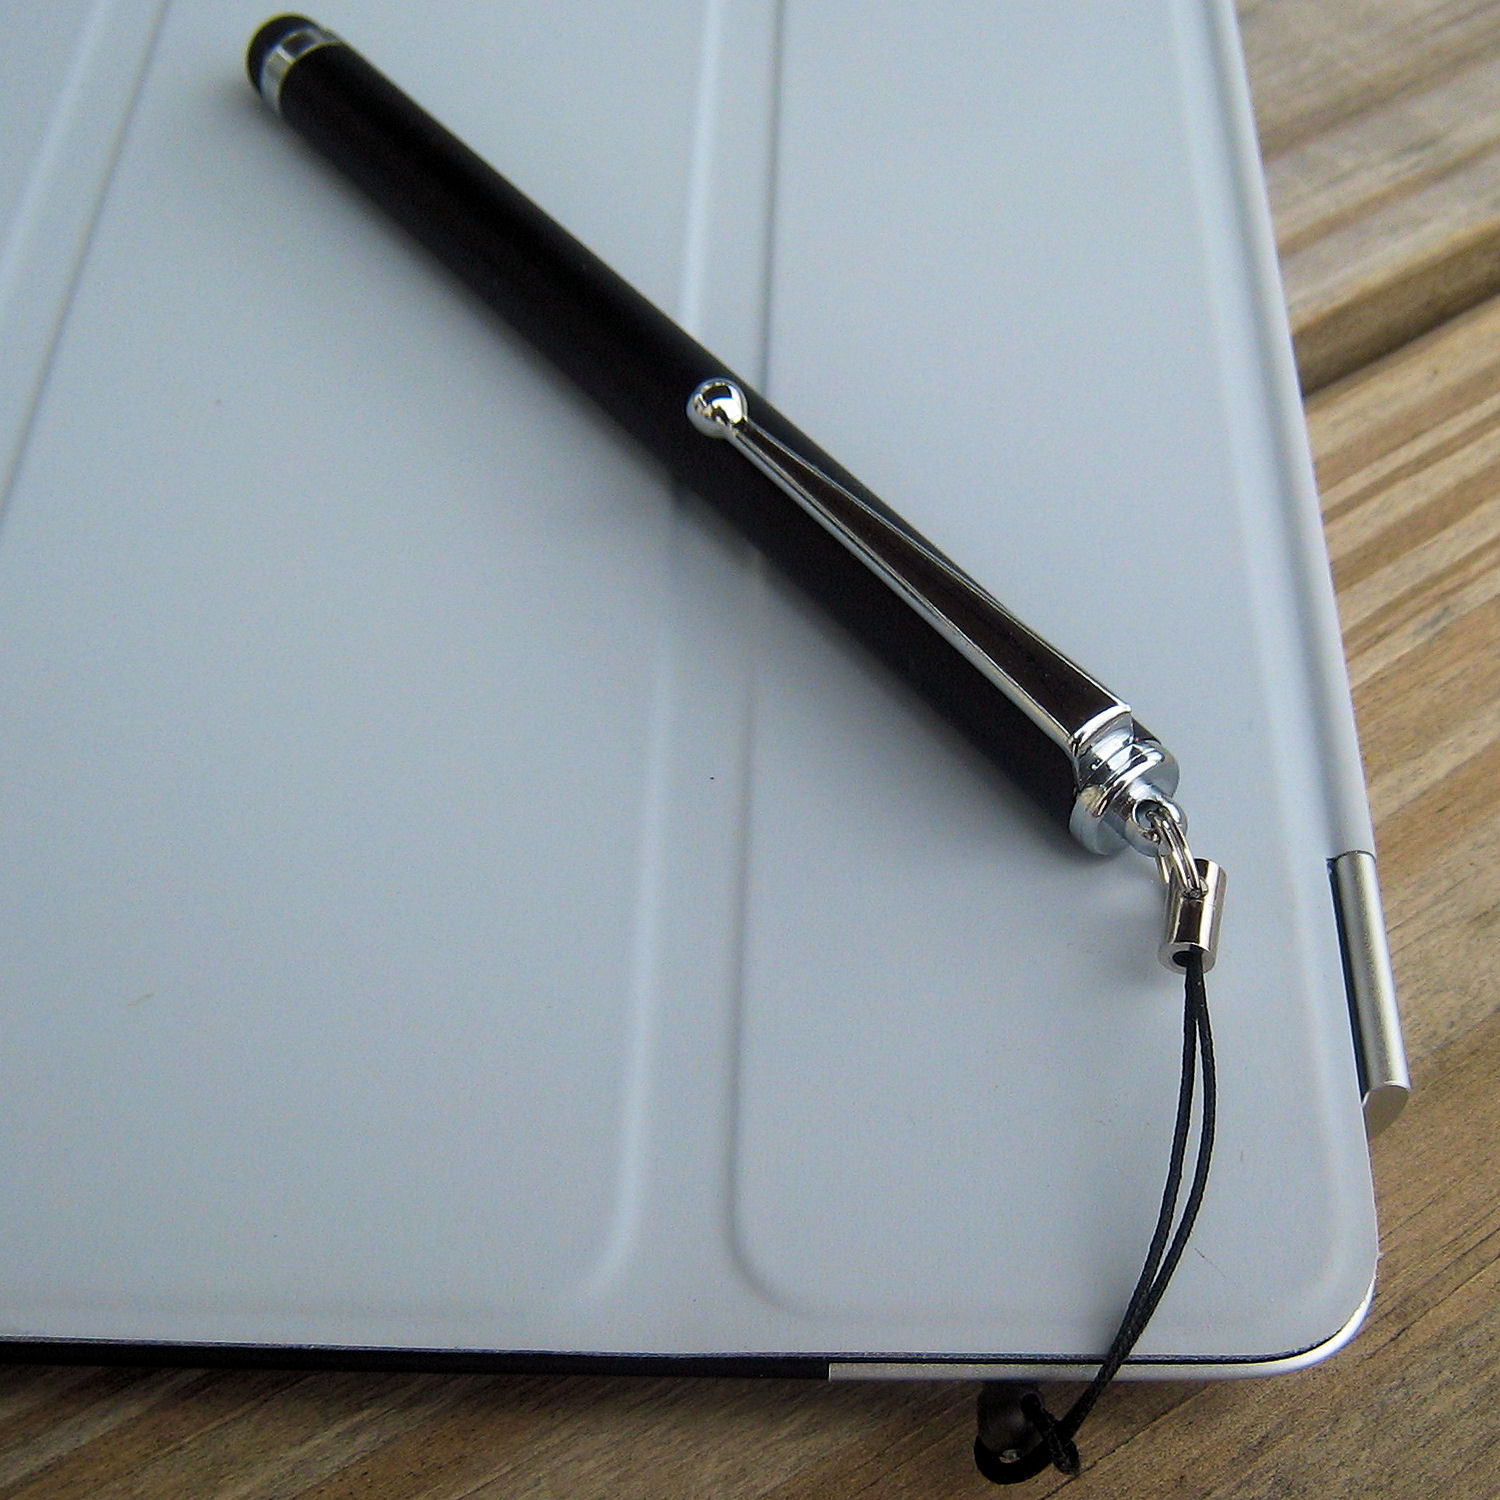 Gomadic Precision Tip Capacitive Stylus Pen designed for the LG Optimus 3D (Black Color) - Lifetime Warranty